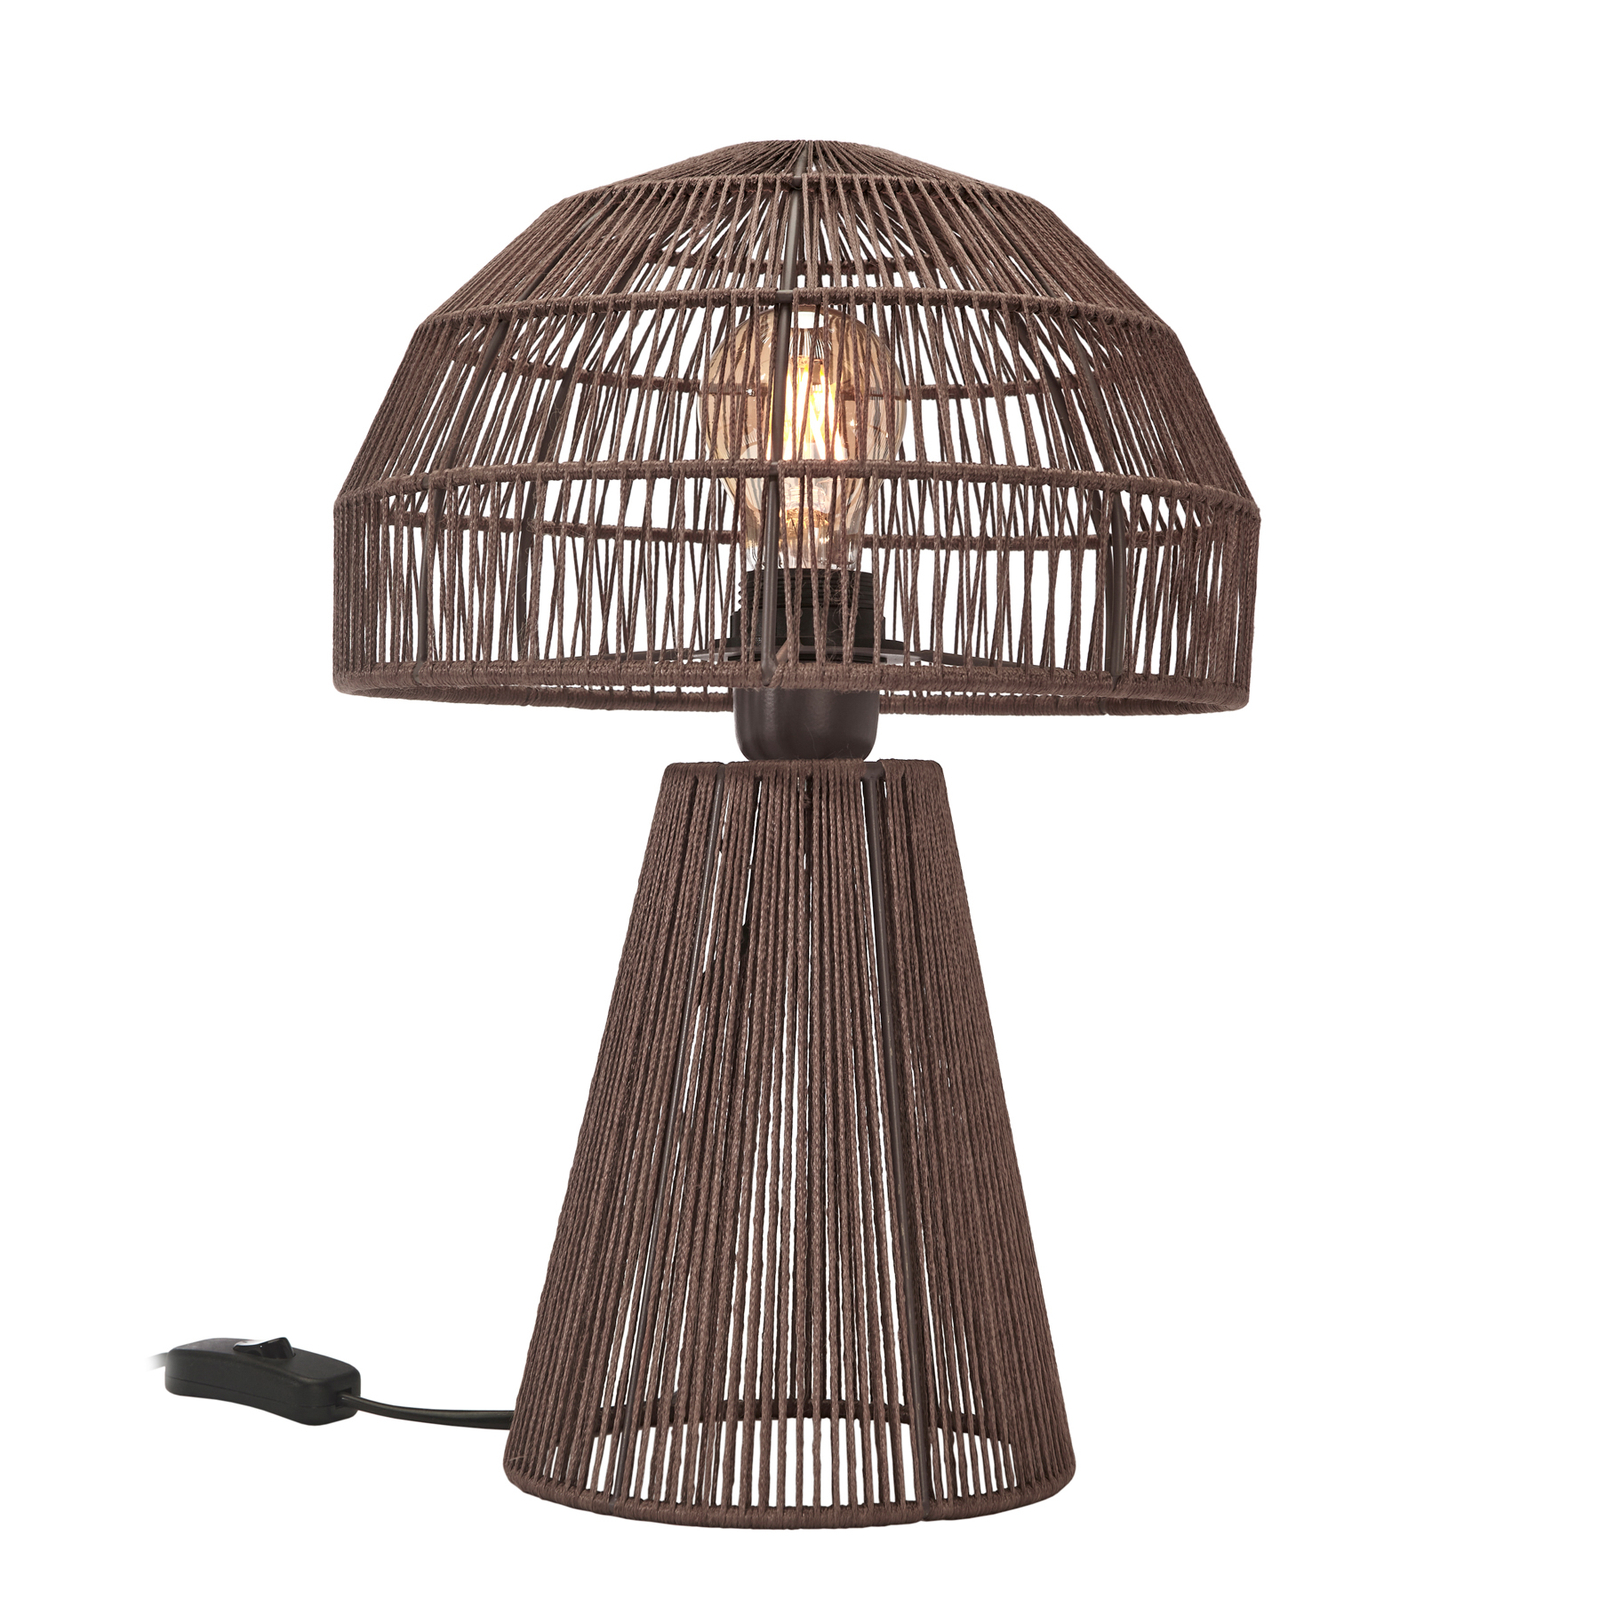 PR Home Porcini asztali lámpa 37cm magas, barna